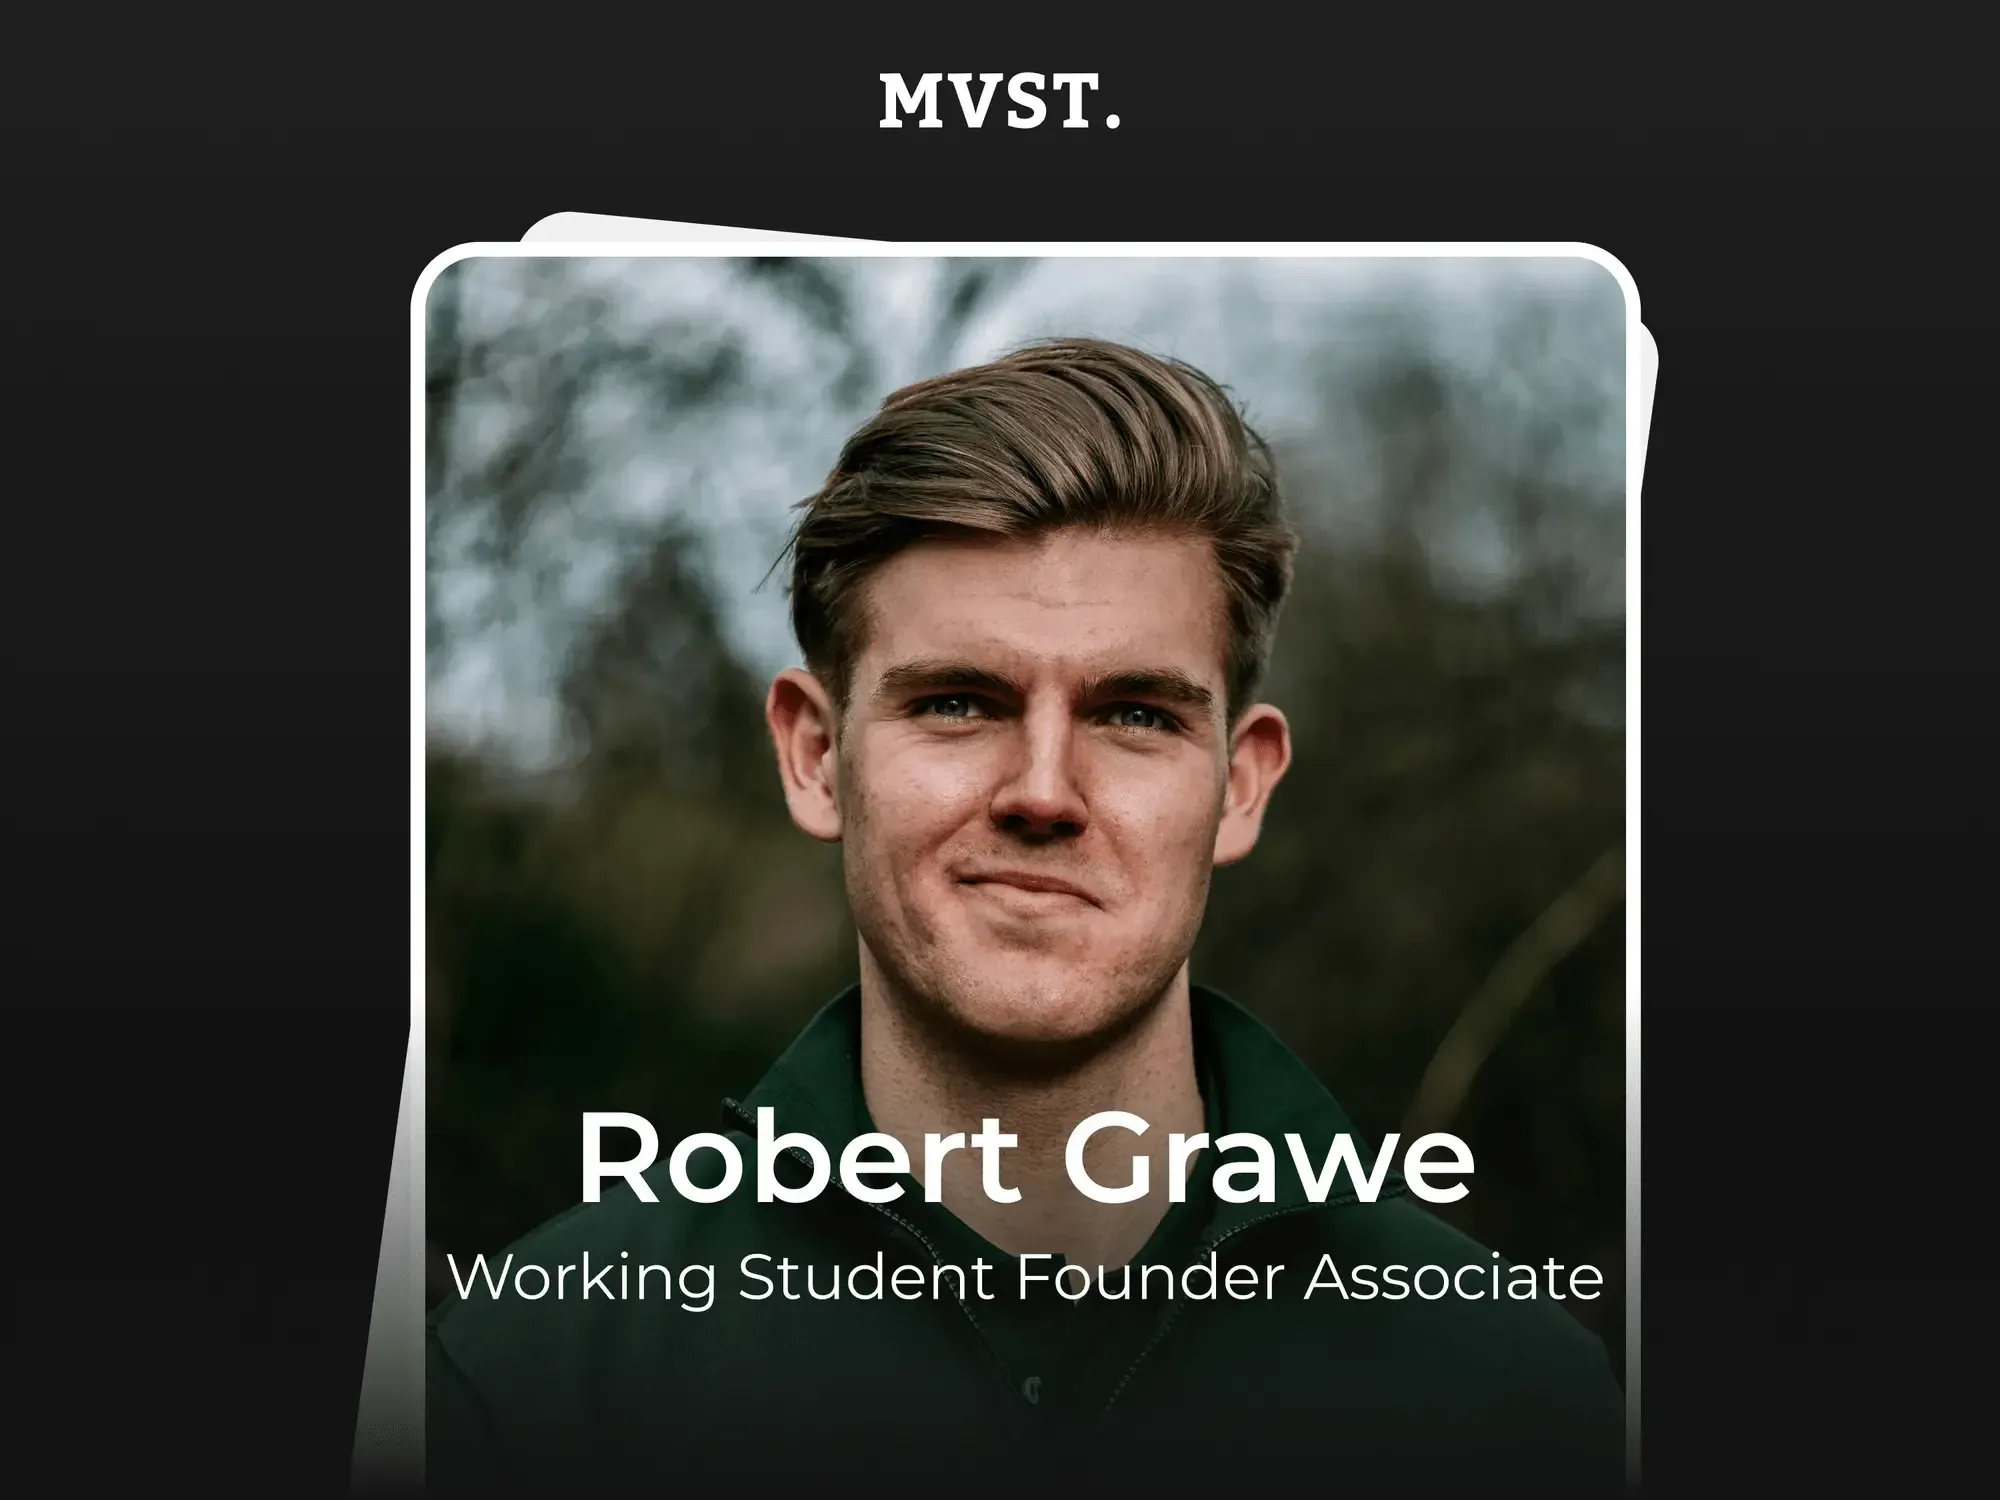 Welcome to MVST, Robert!